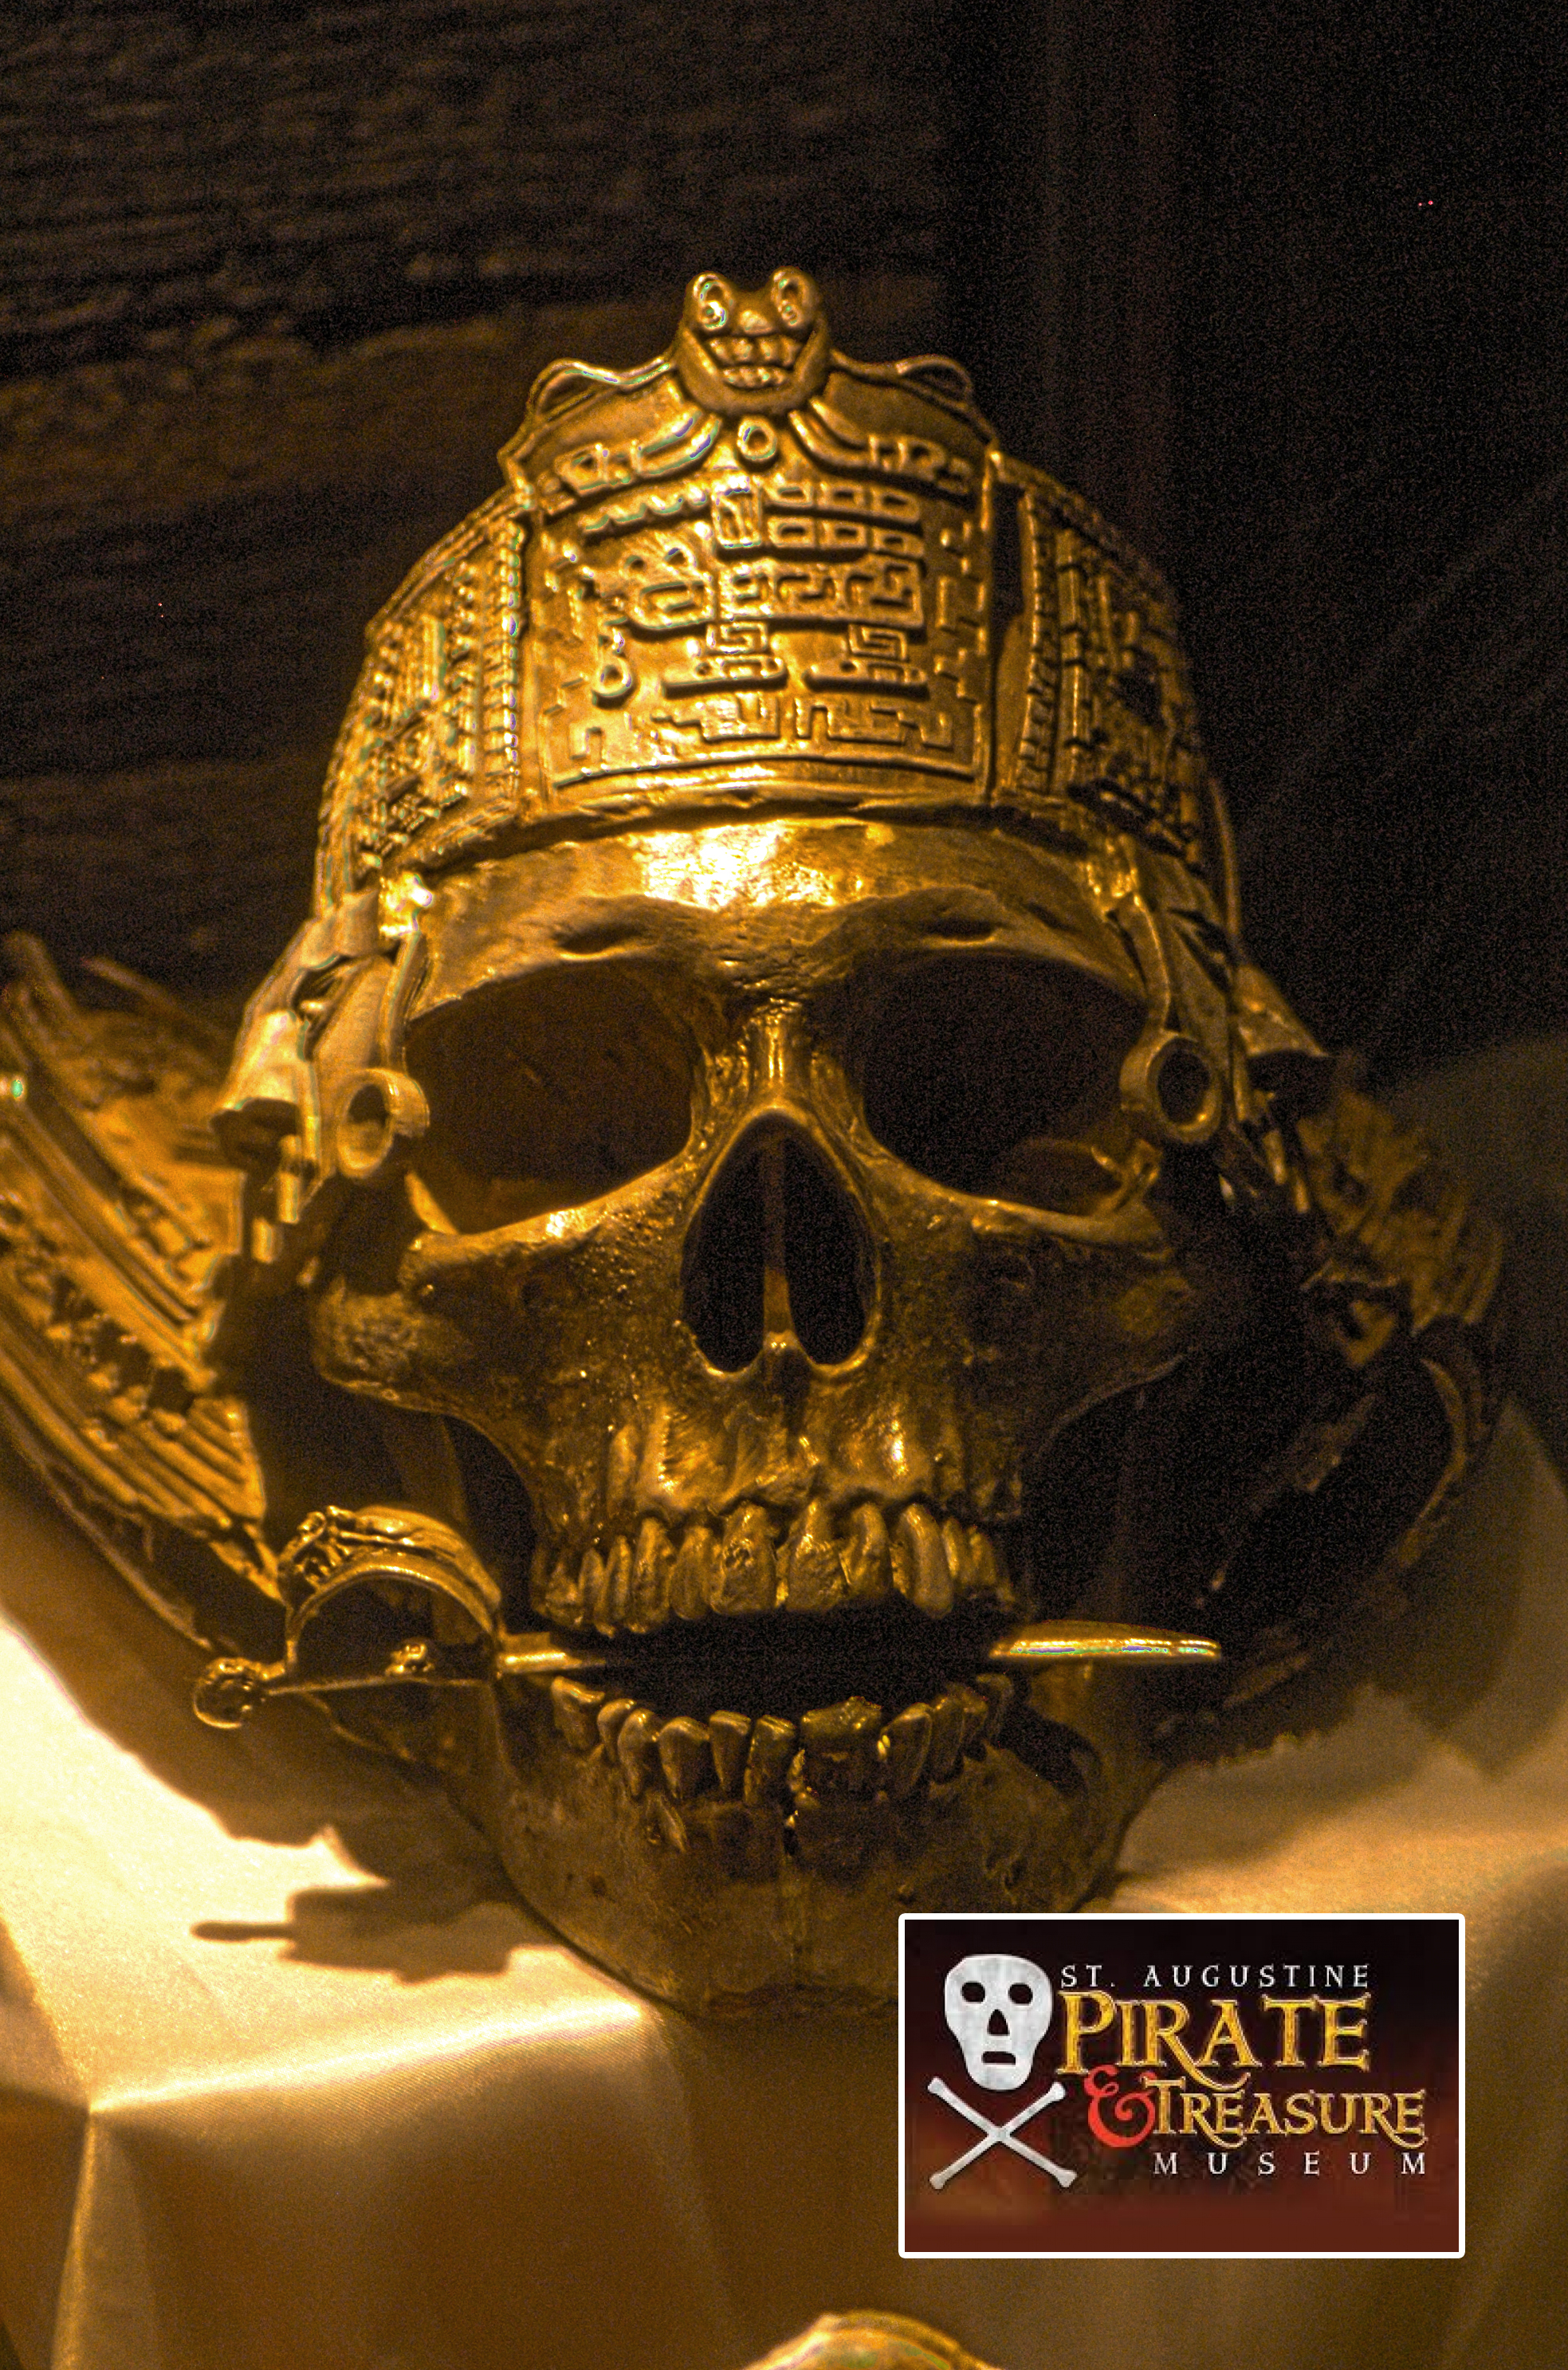 Artifact inside the  St. Augustine Pirate Treasure Museum